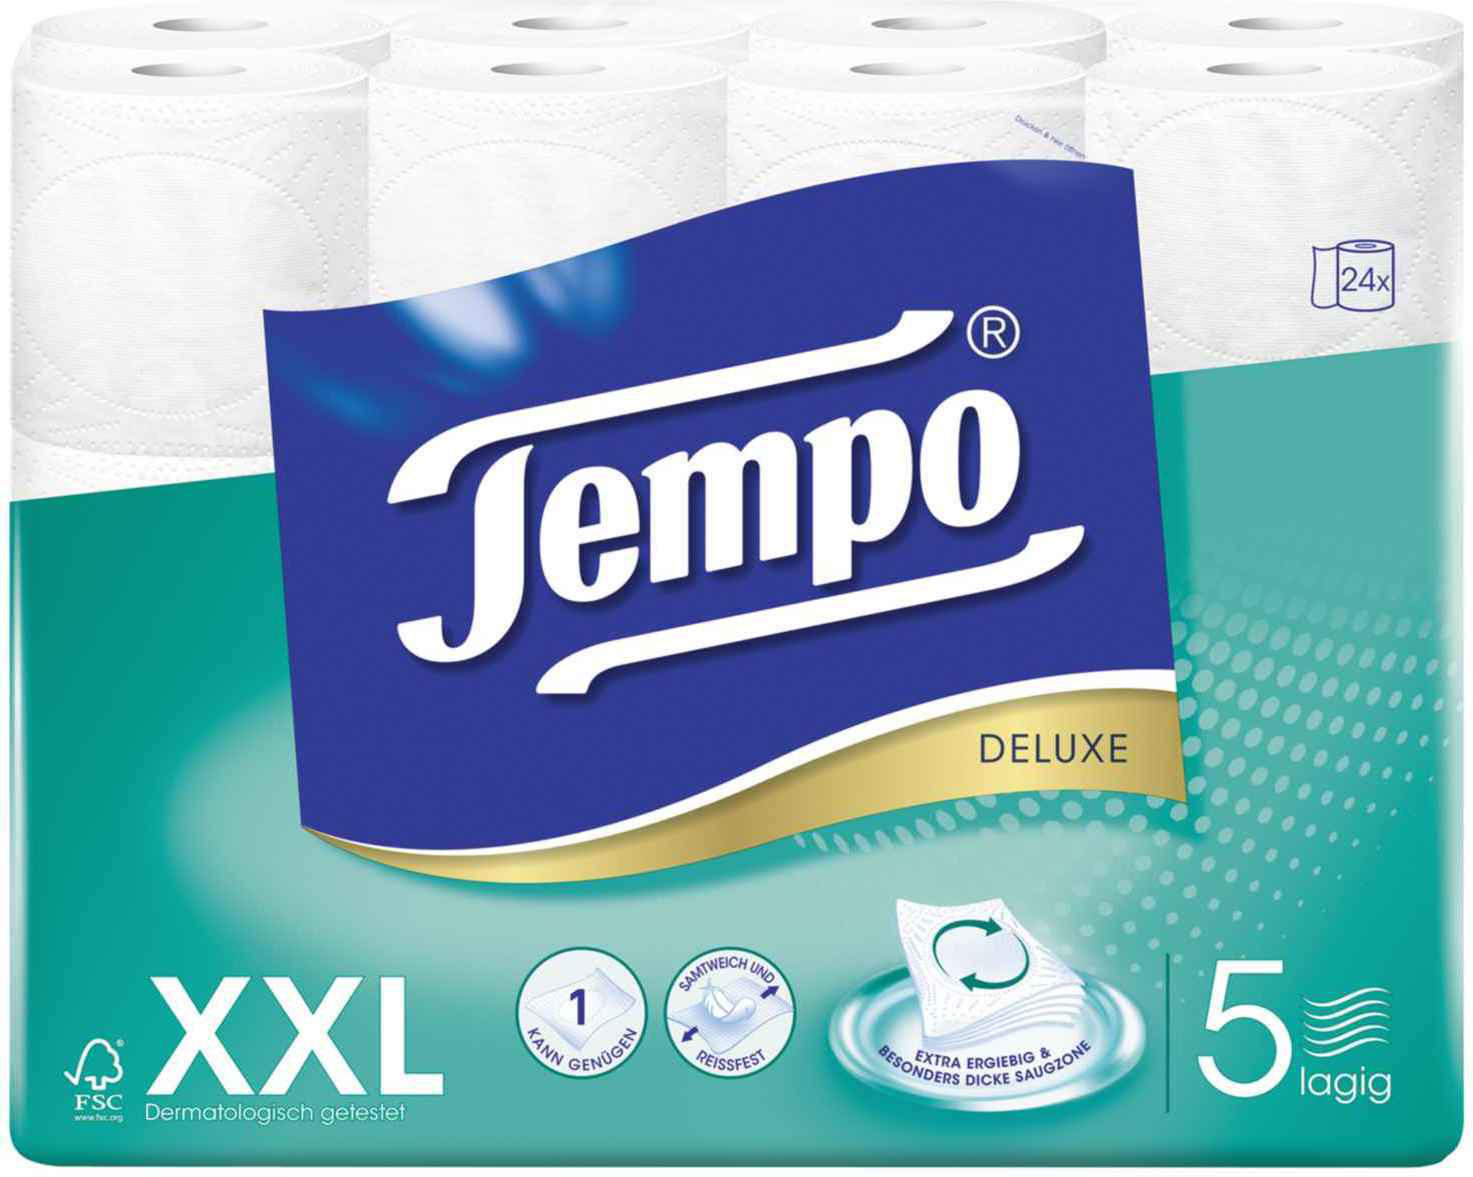 24 x TEMPO Toilettenpapier DELUXE 5-lagig XXL